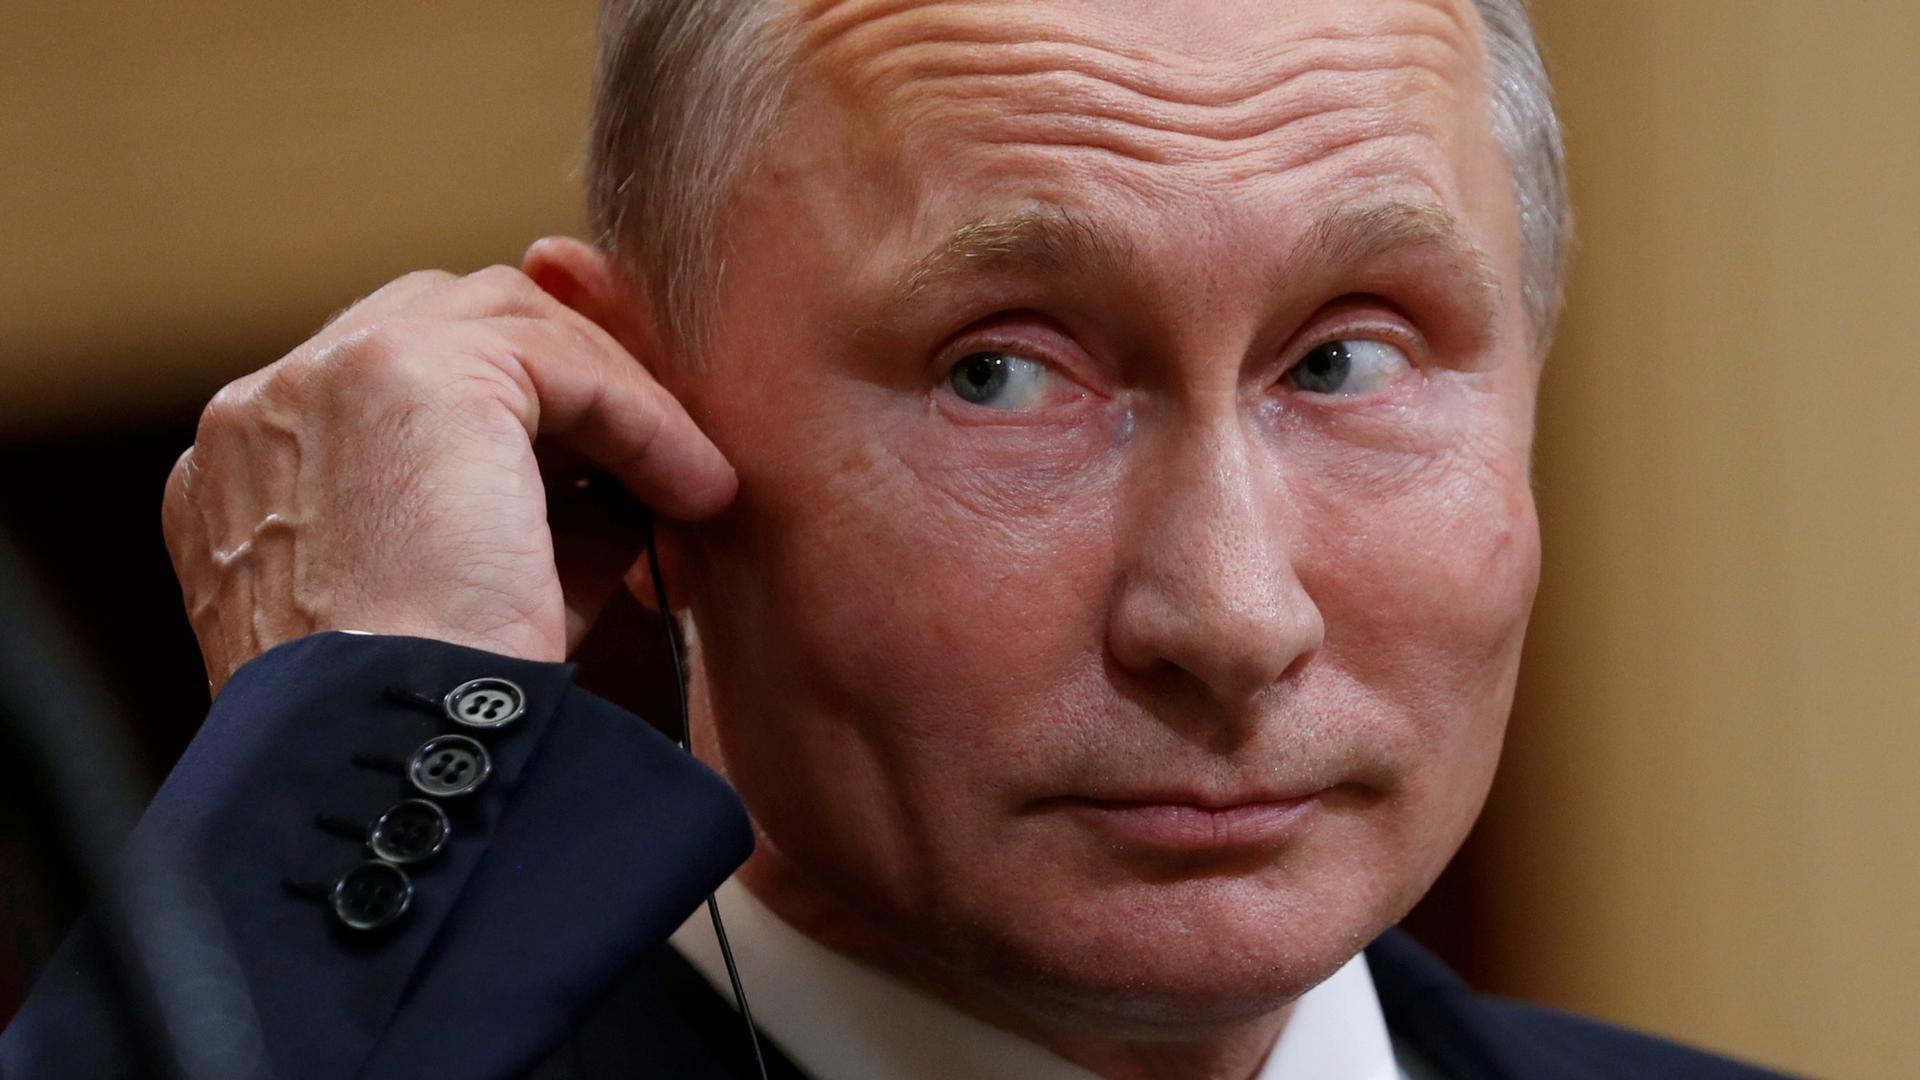 A close-up photography of Russian President Vladimir Putin touching an ear piece.